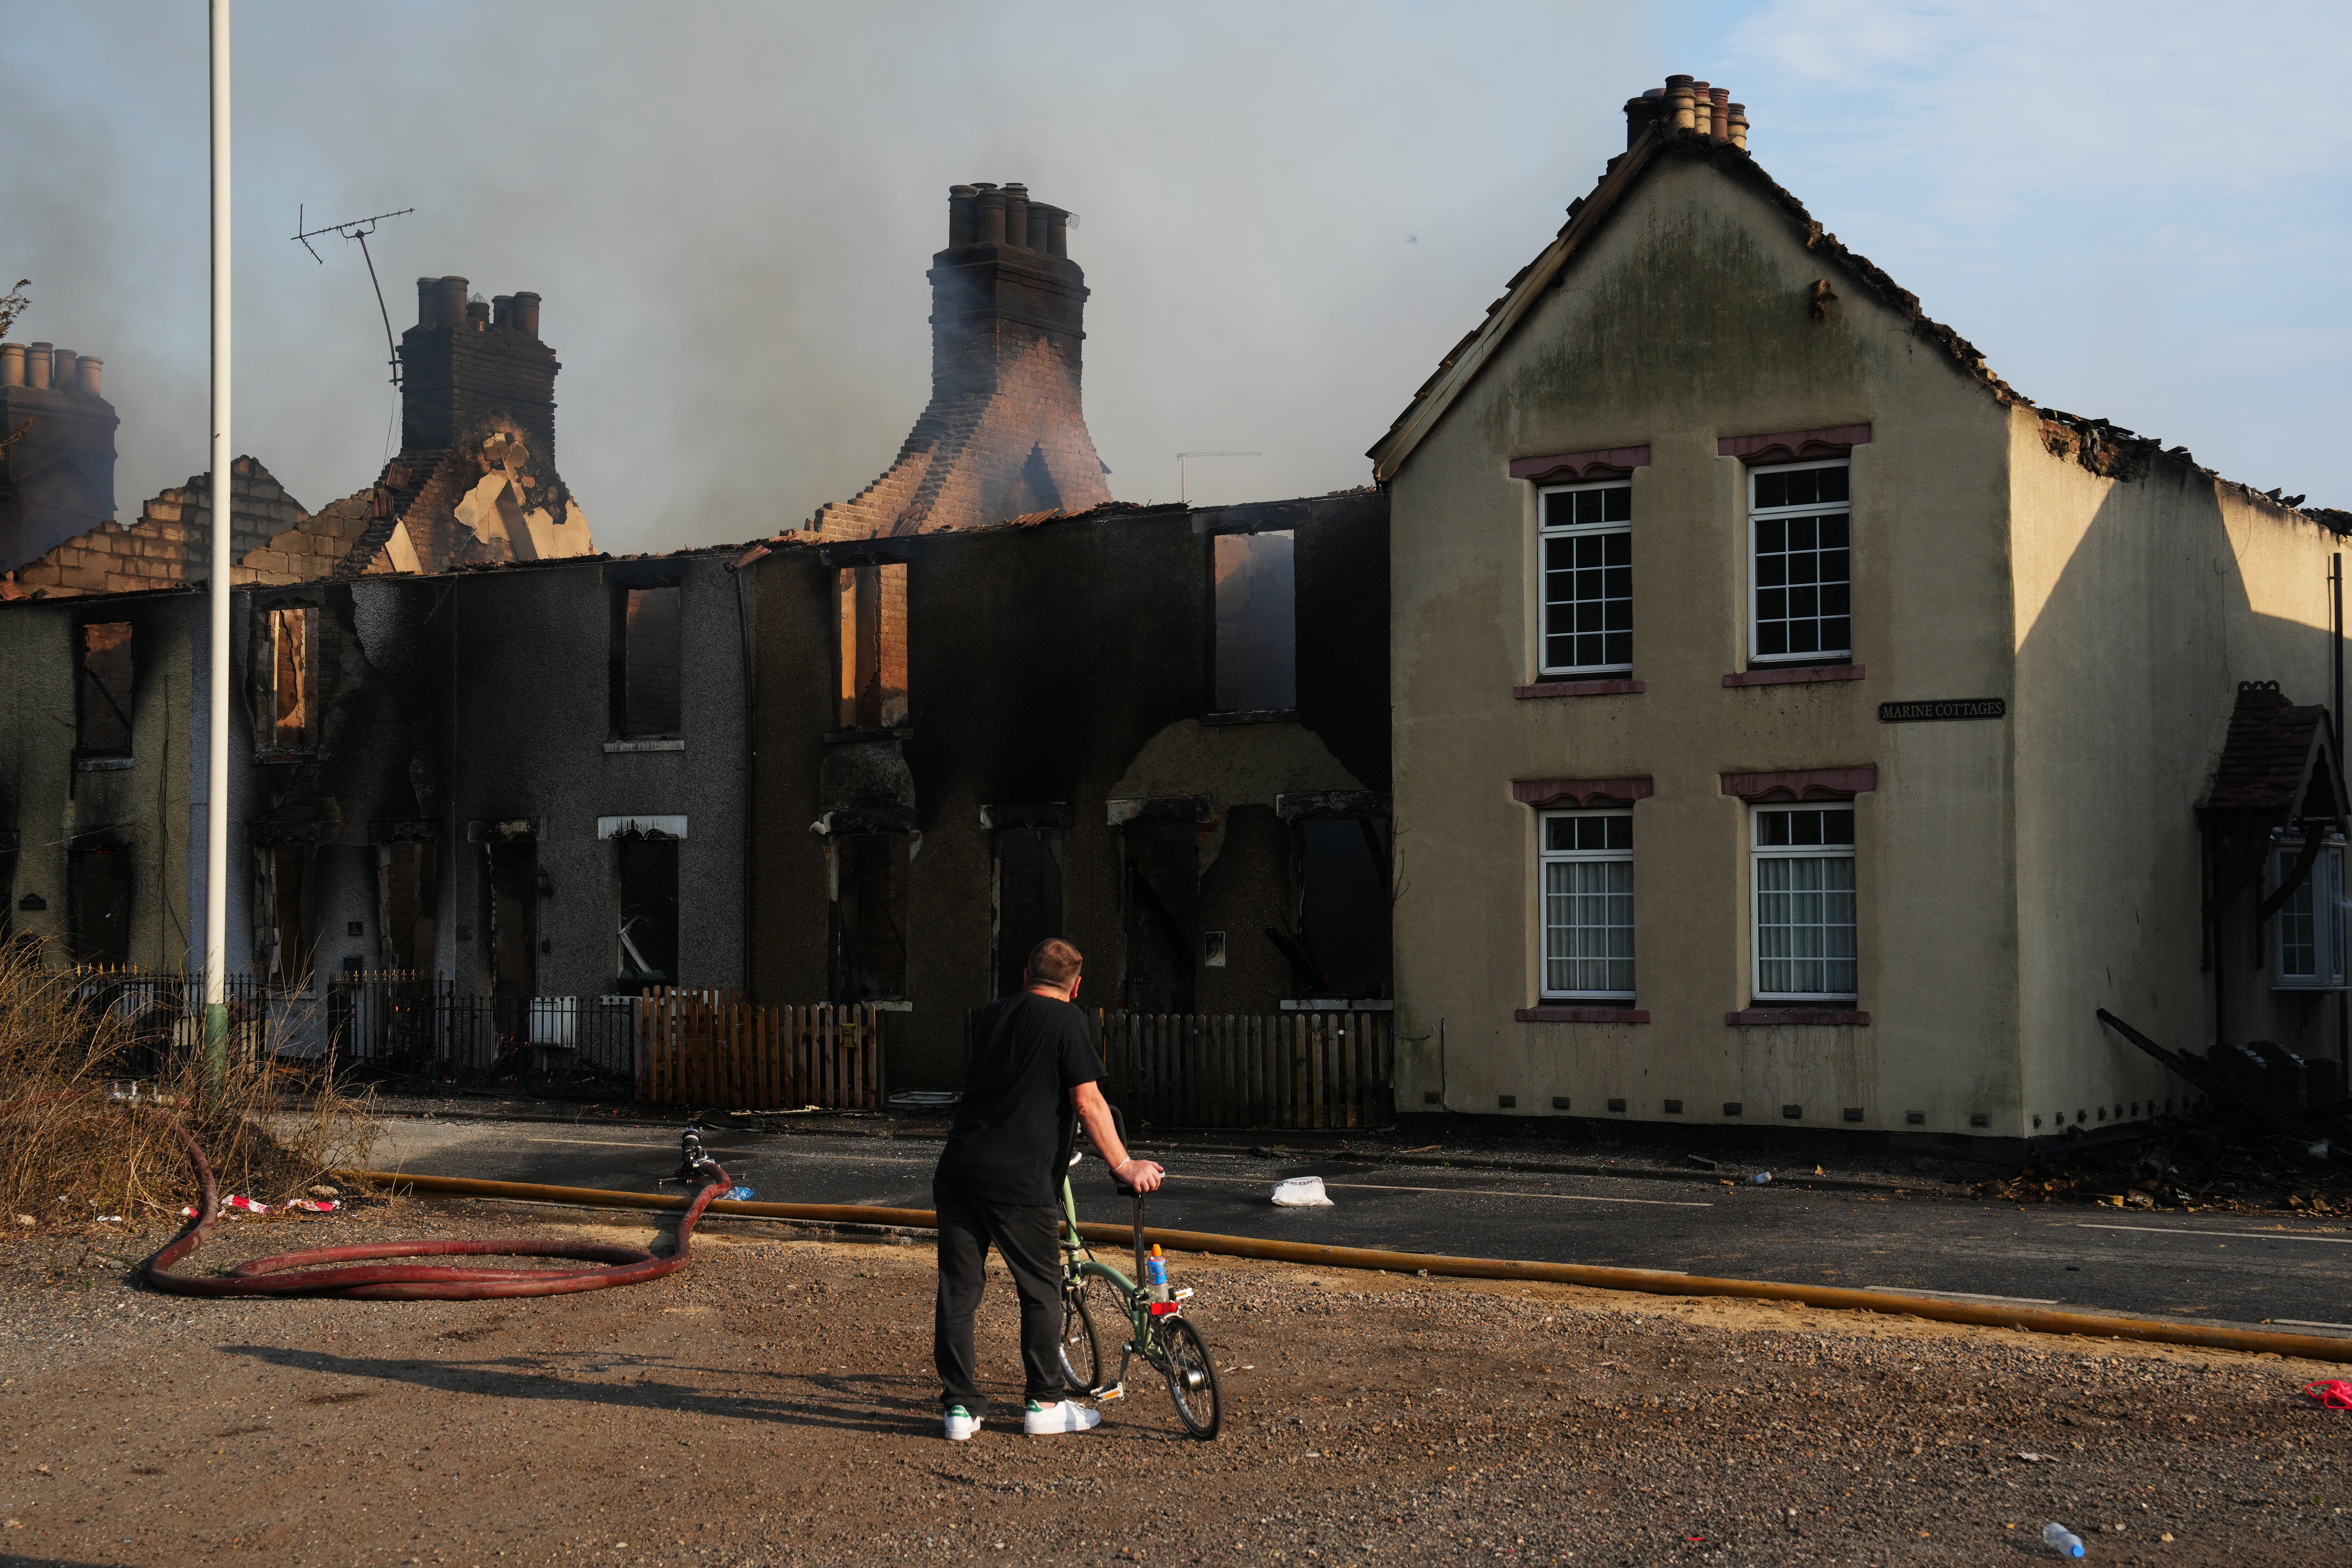 Houses were destroyed in the Wennington blaze